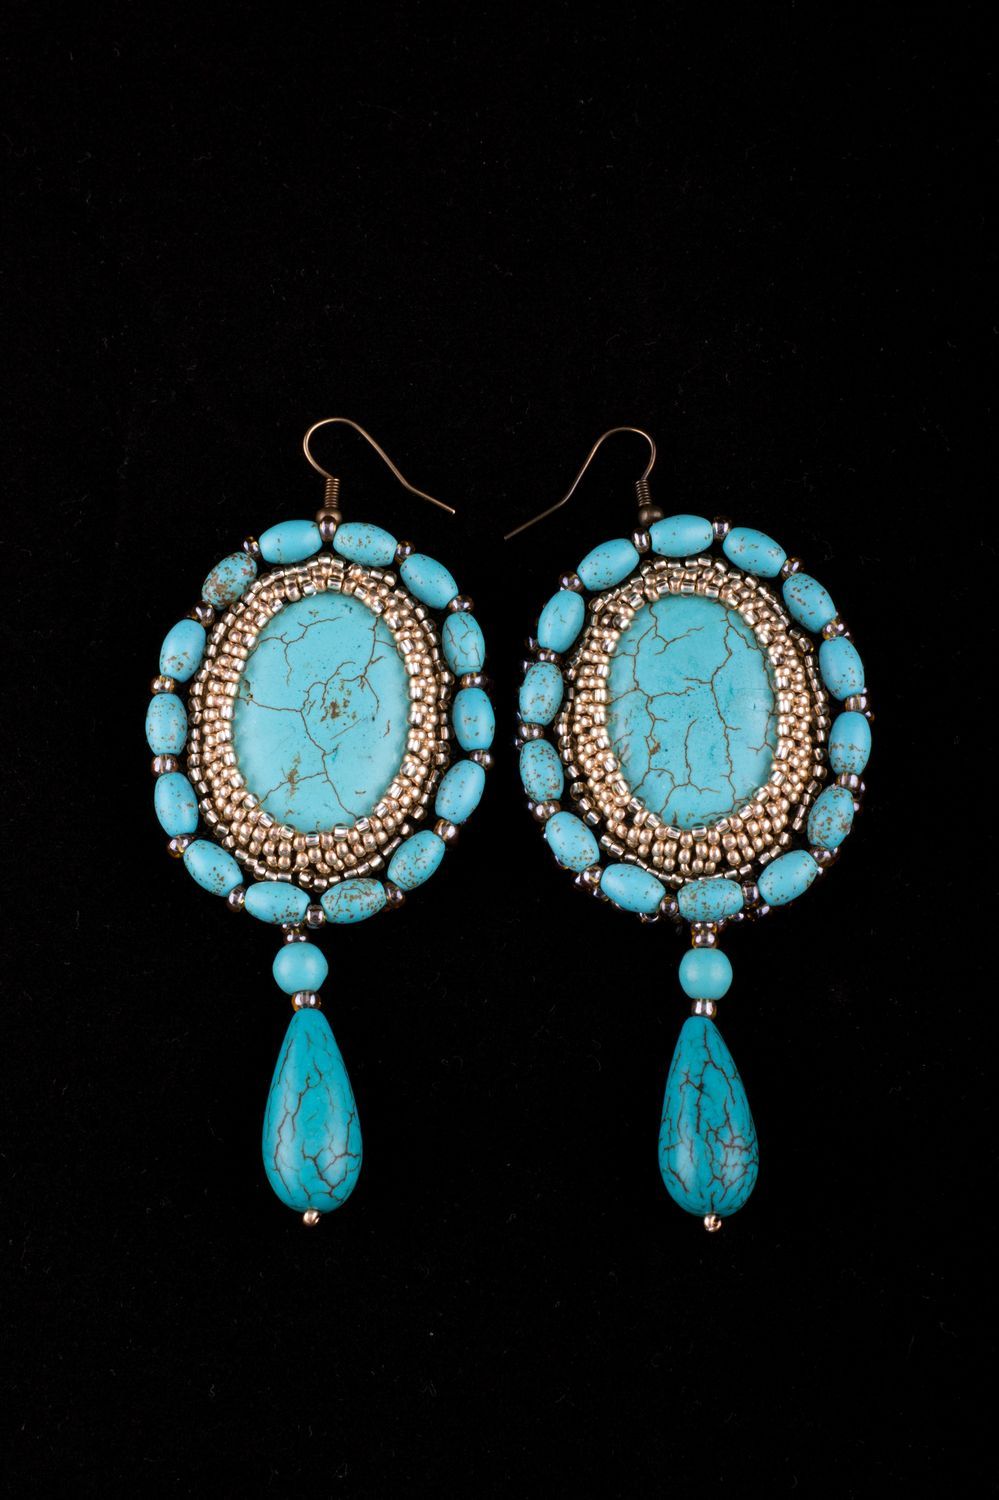 Handmade earrings natural stones earrings turquoise accessory for women photo 3